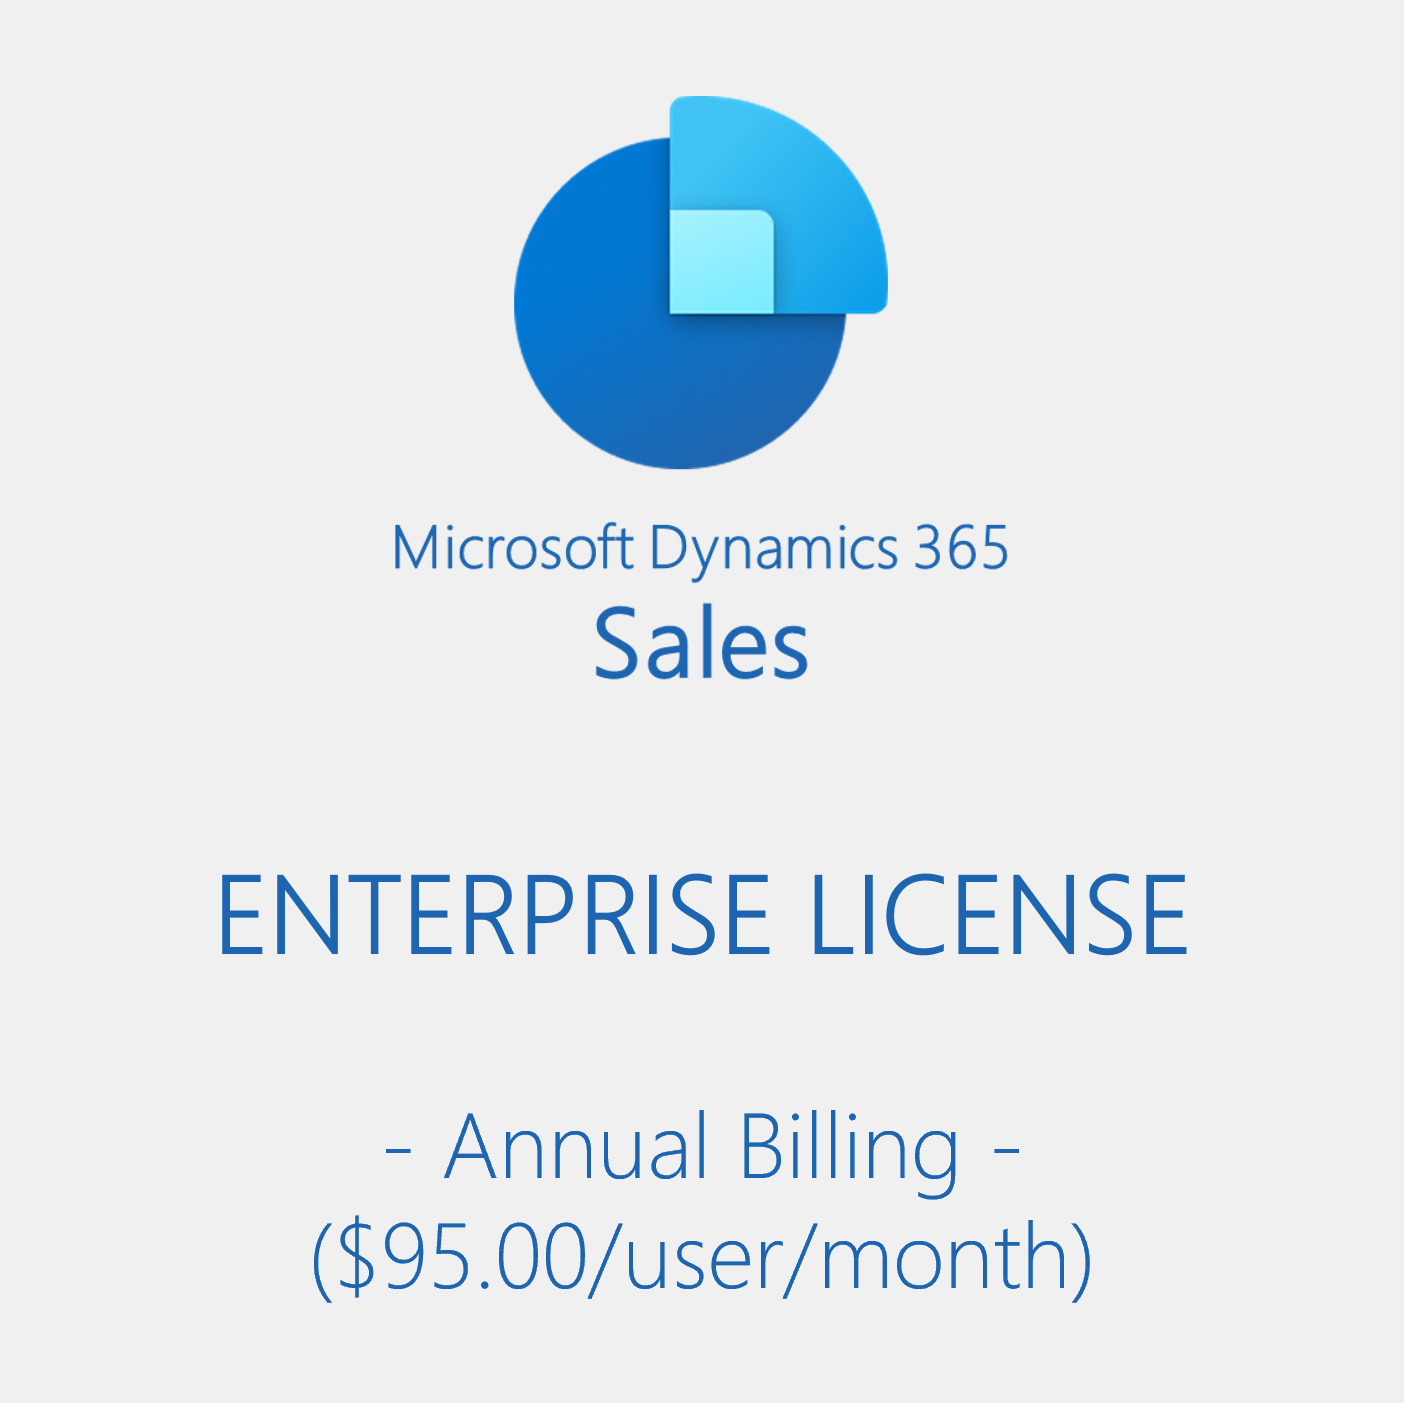 Dynamics 365 Business Central Enterprise License